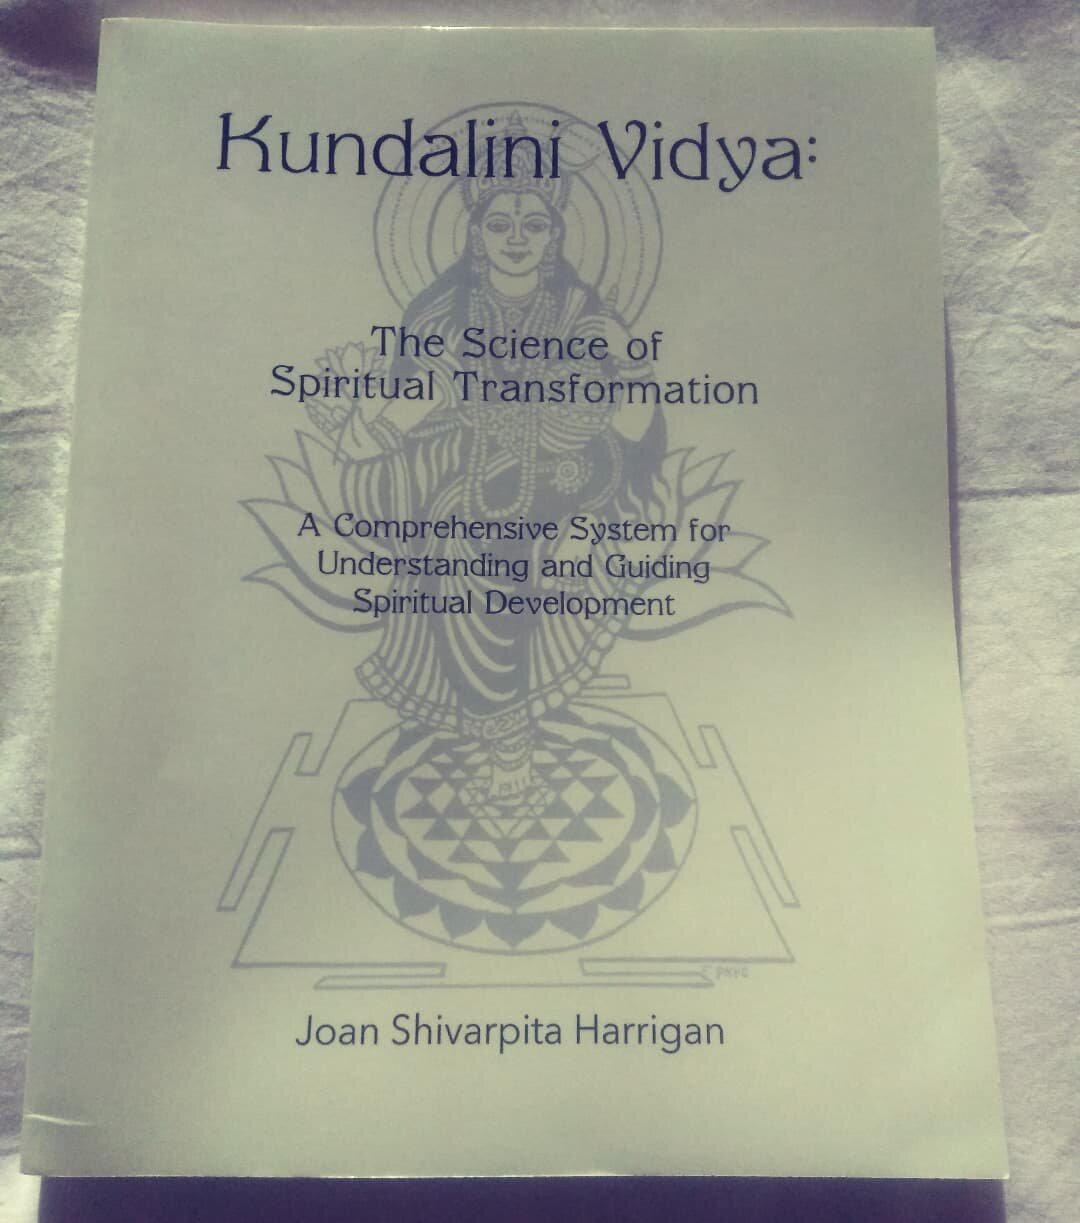 Doing some intense training this weekend with #fielddynamics focussed on #spiritualanatomy. I am referred back to the work of #joanshivarpitaharrigan

#energyhealing #spiritualdevelopment #awakening #kundalini